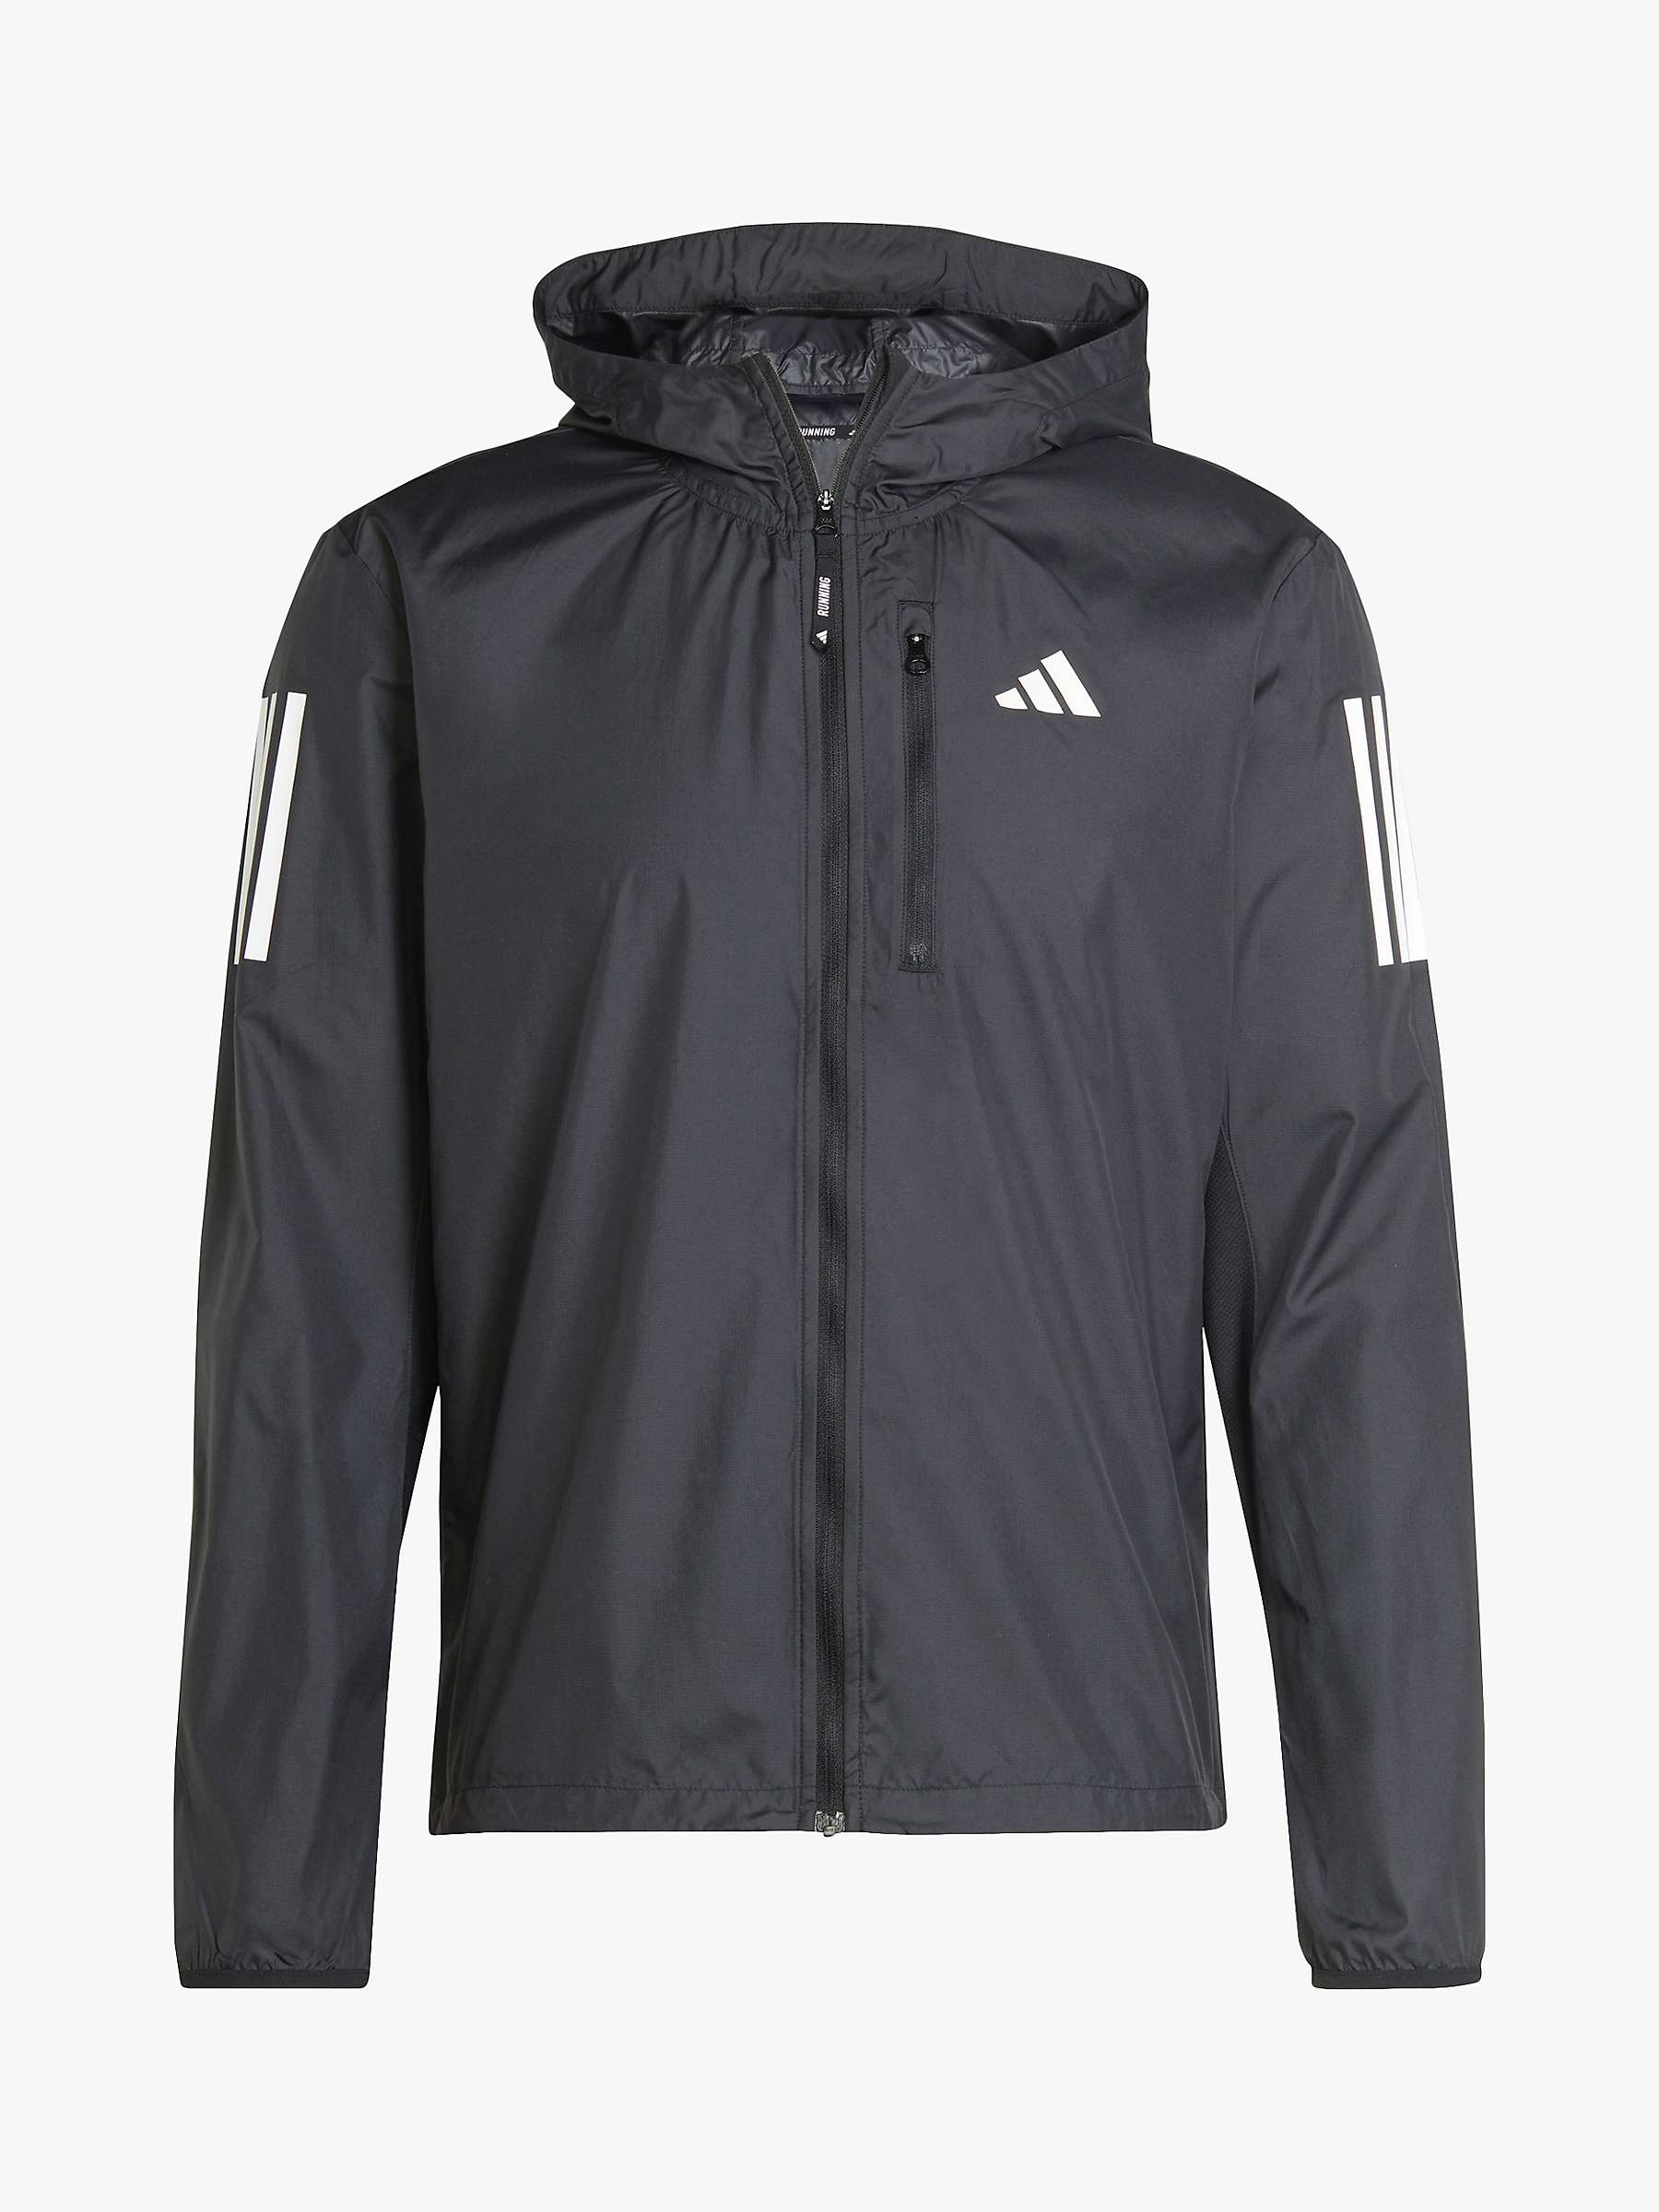 Buy adidas Own The Run Men's Running Jacket, Black Online at johnlewis.com